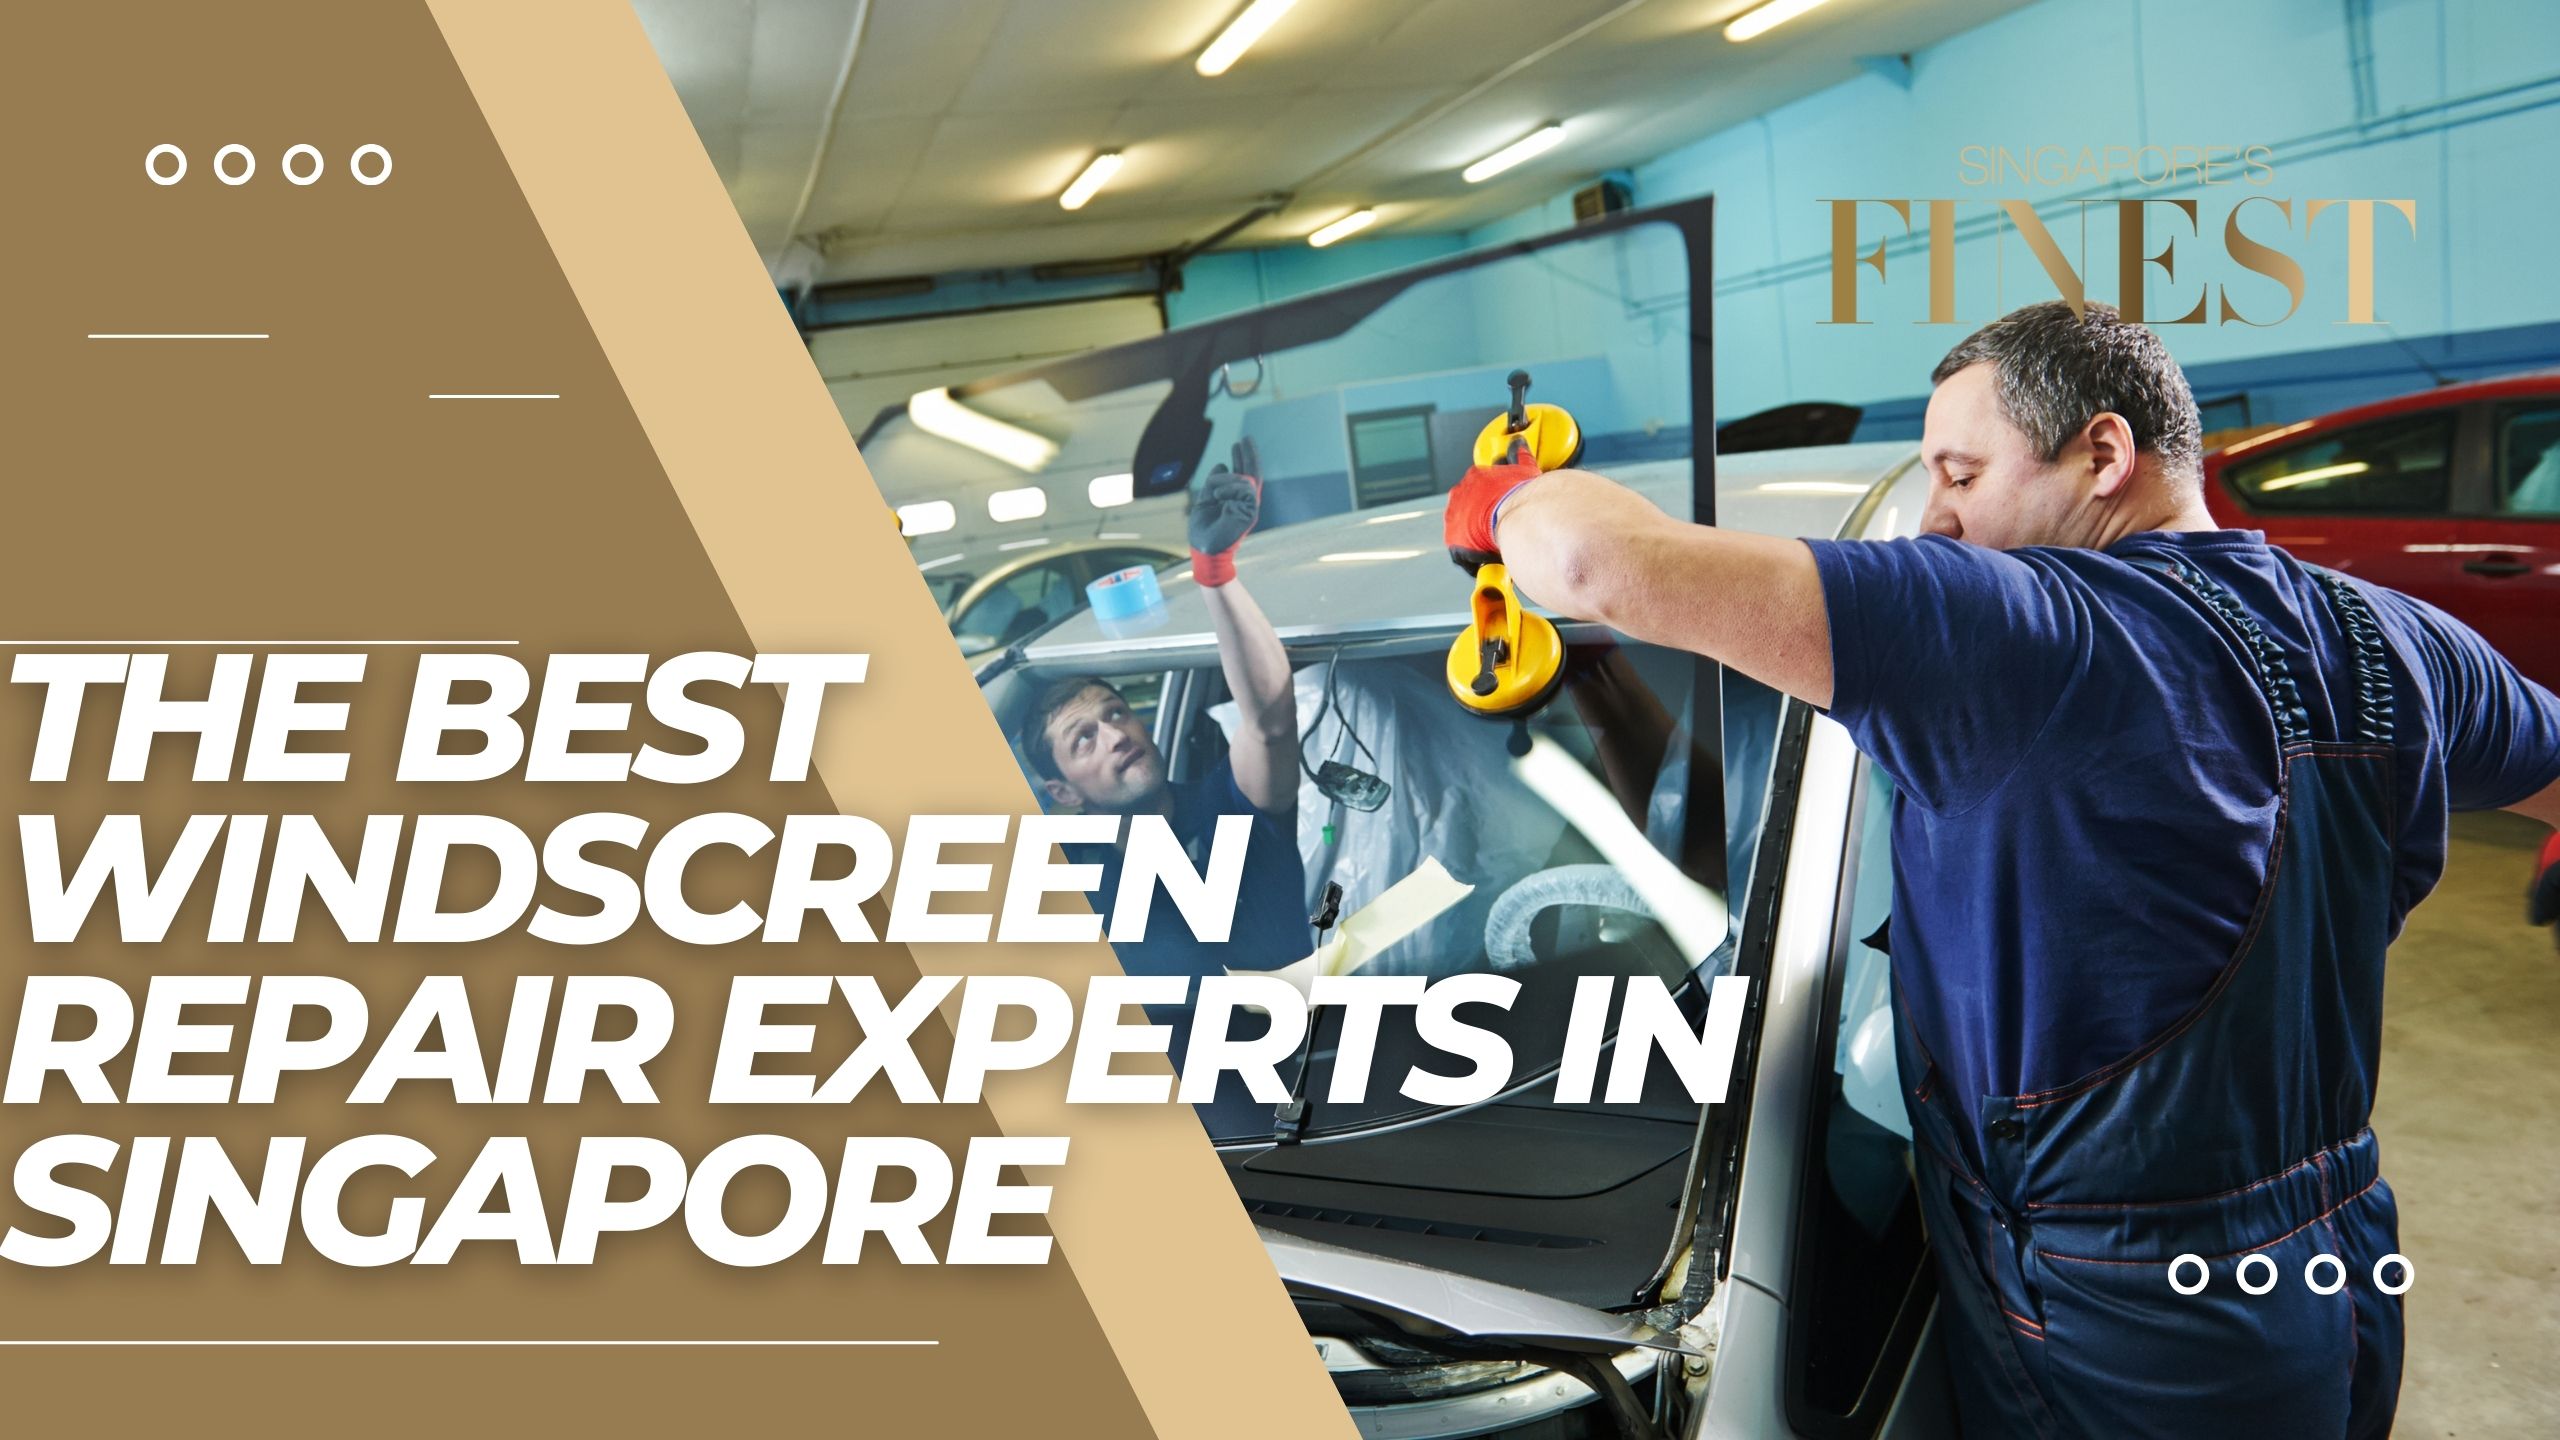 The Finest Windscreen Repair Experts in Singapore